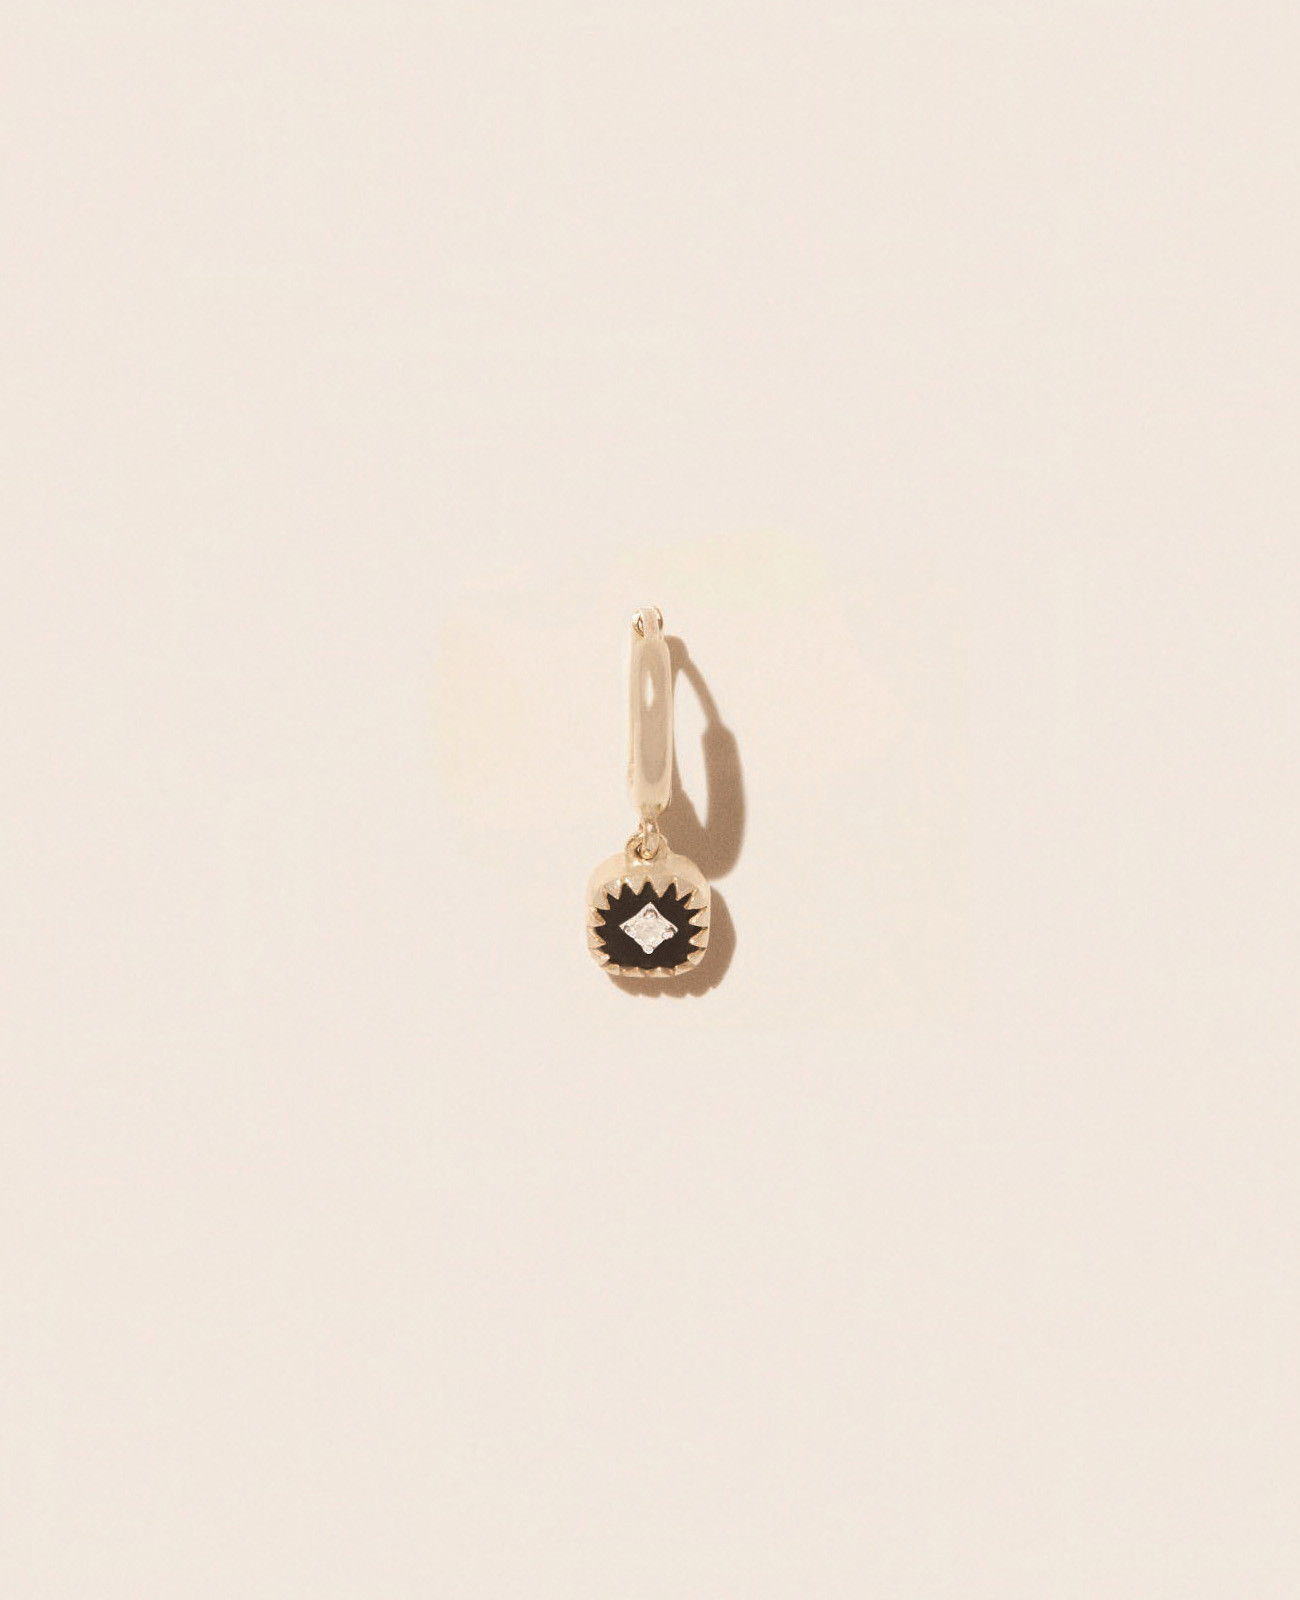 PIERROT BLACK earring pascale monvoisin jewelry paris